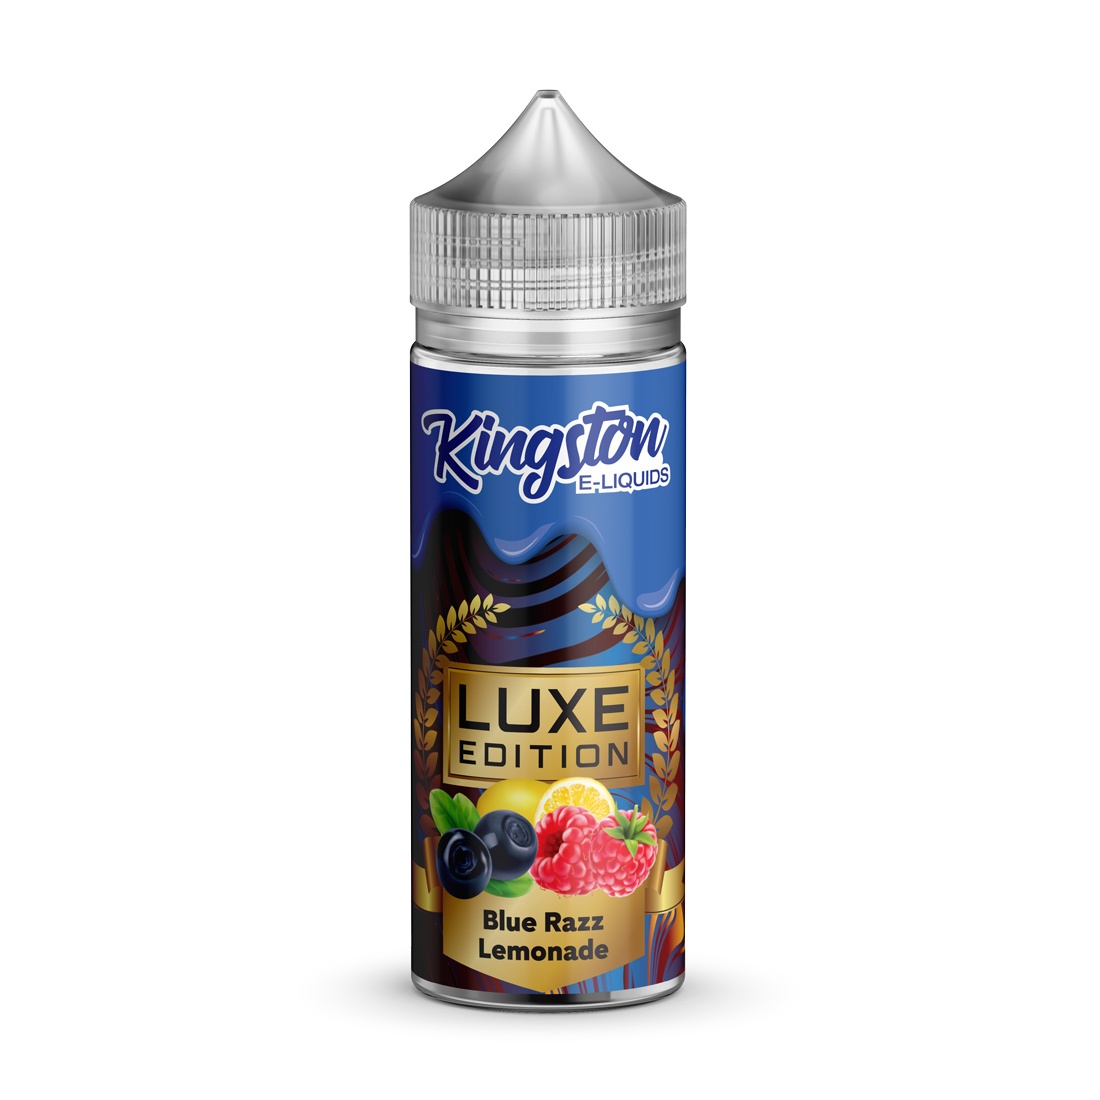 Kingston-Luxe-Blue-Razz-Lemonade-E-Liquid